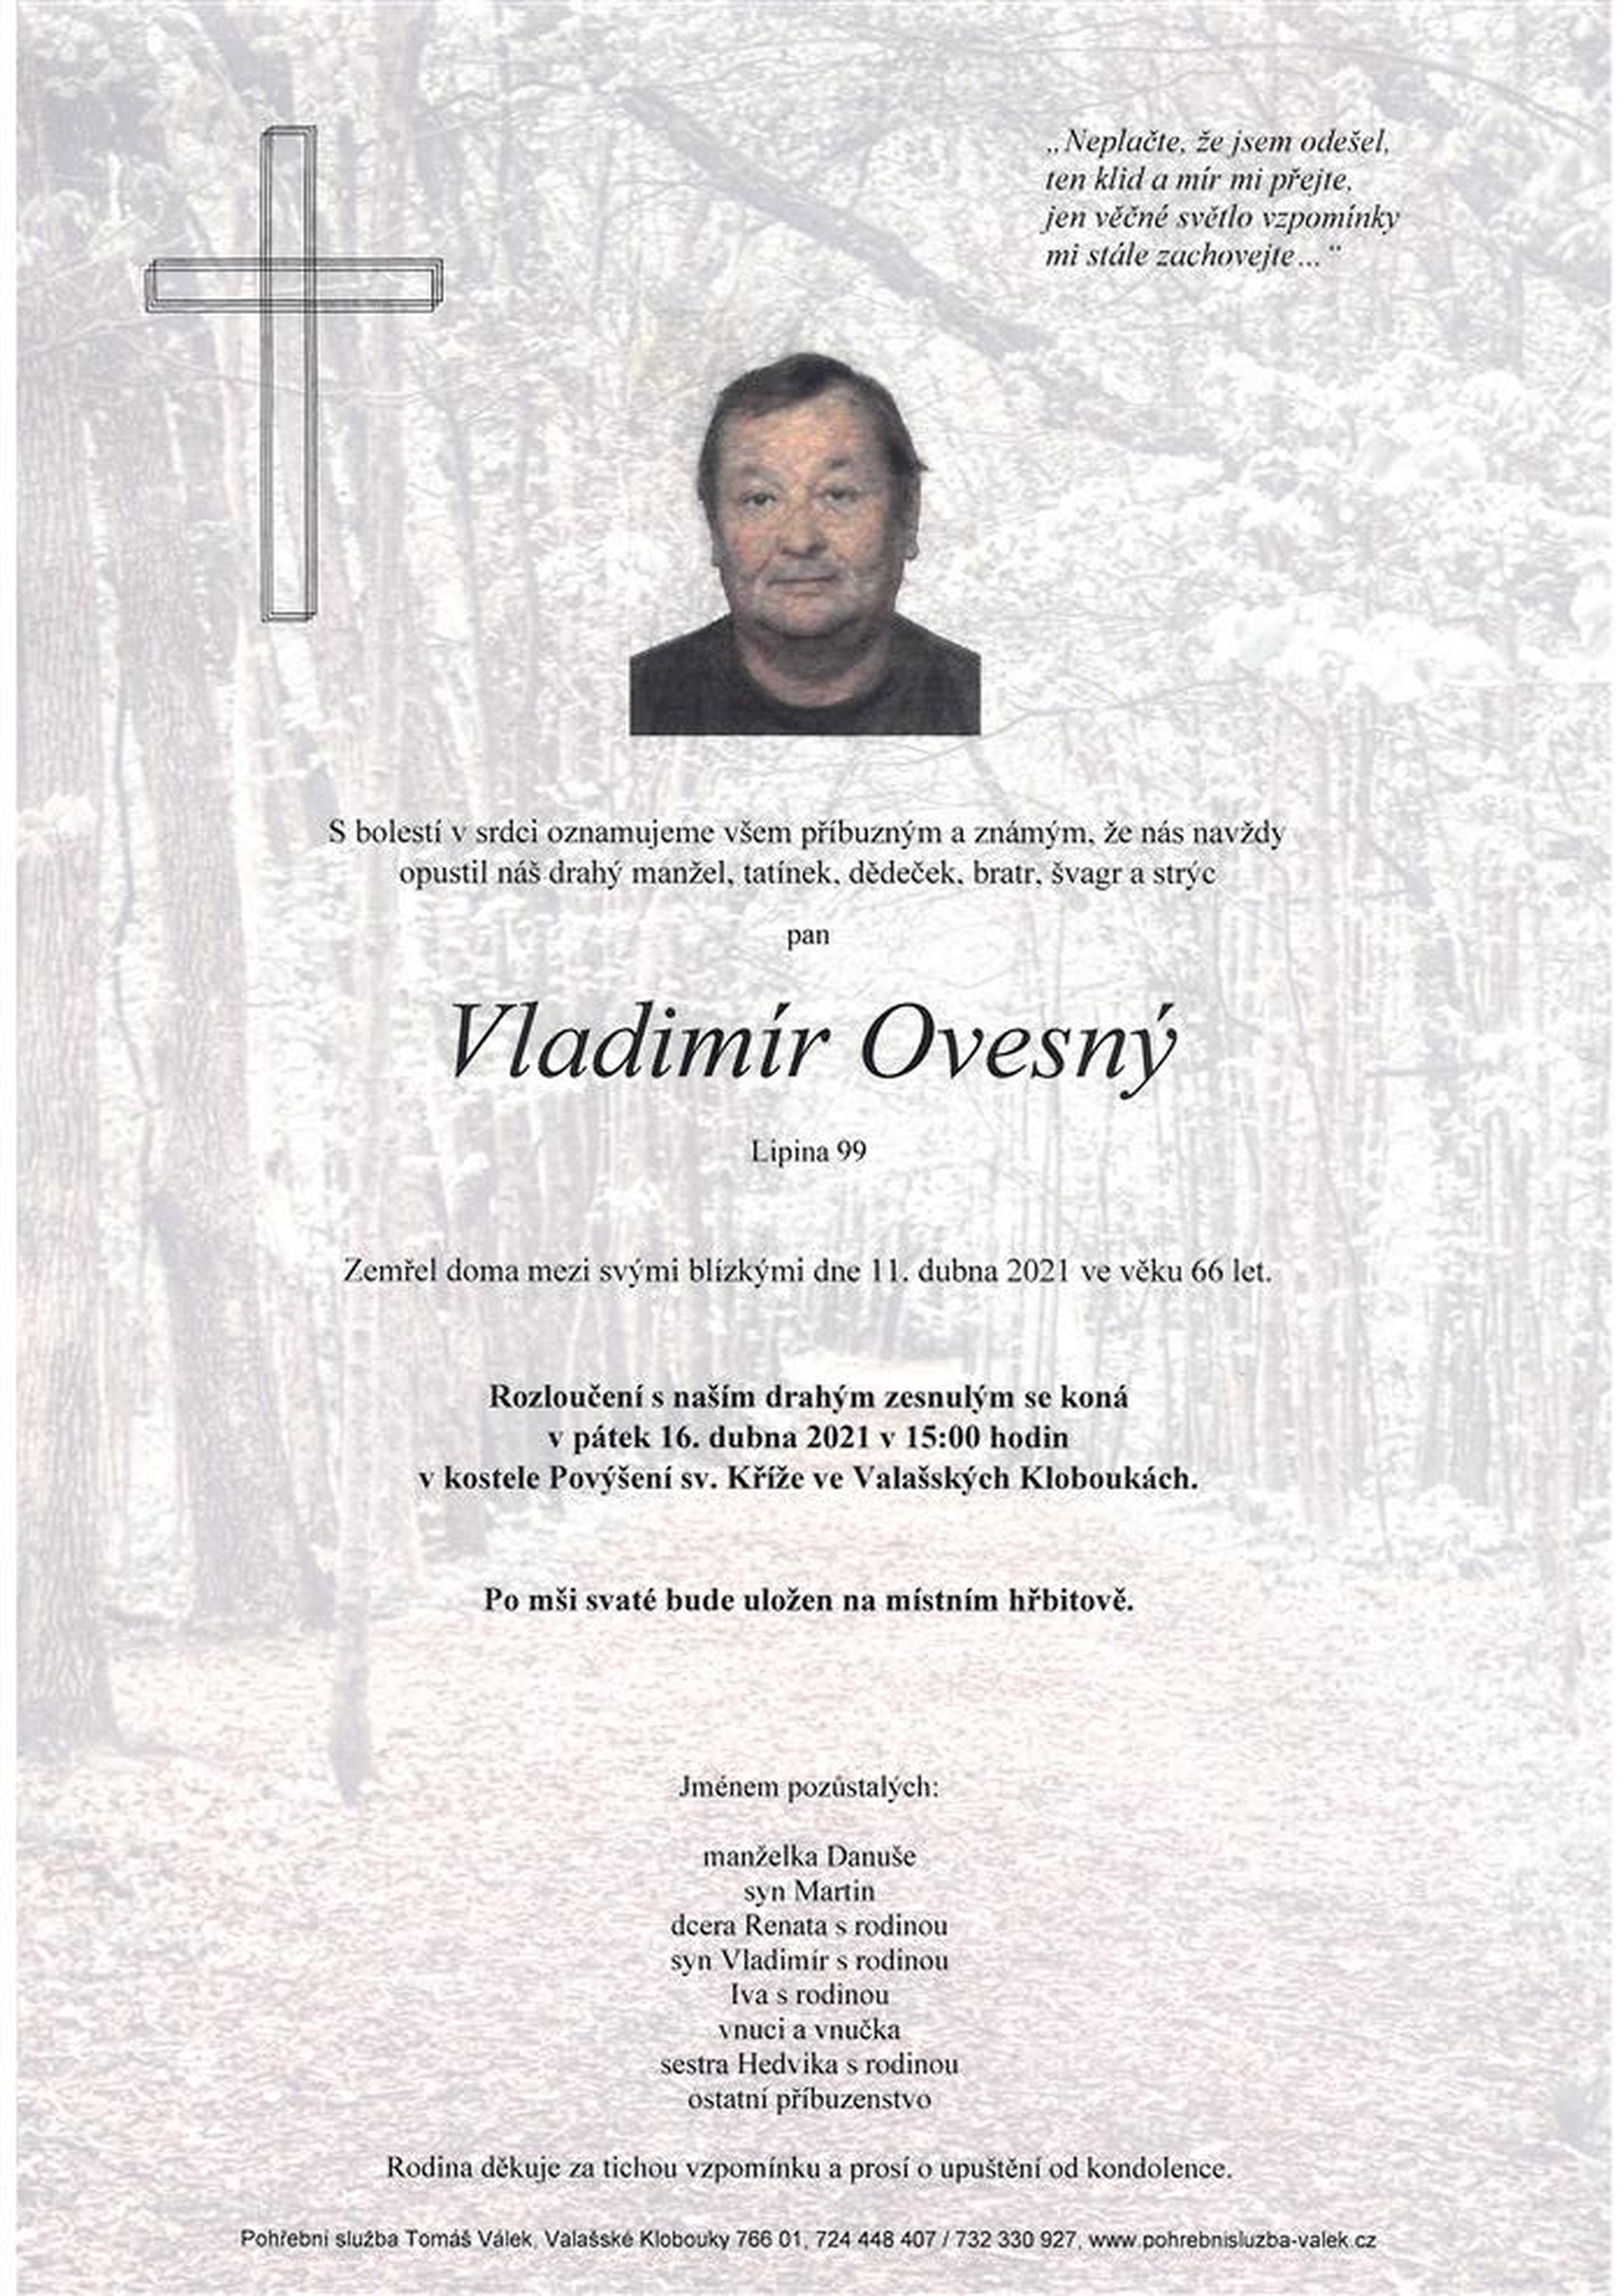 Vladimír Ovesný